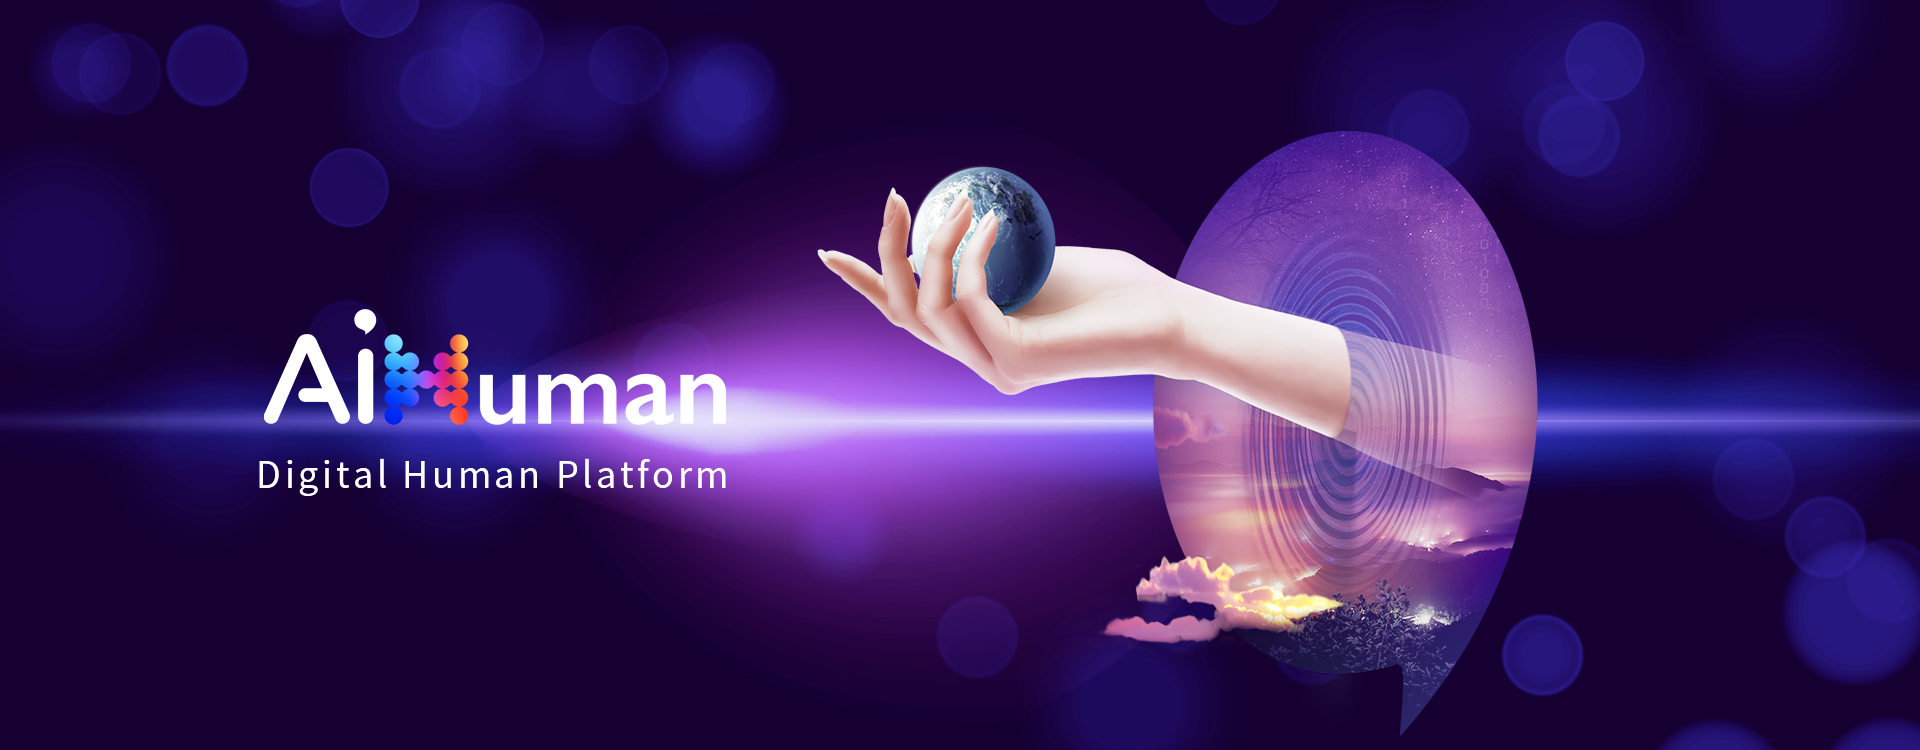 Digital Human Platform